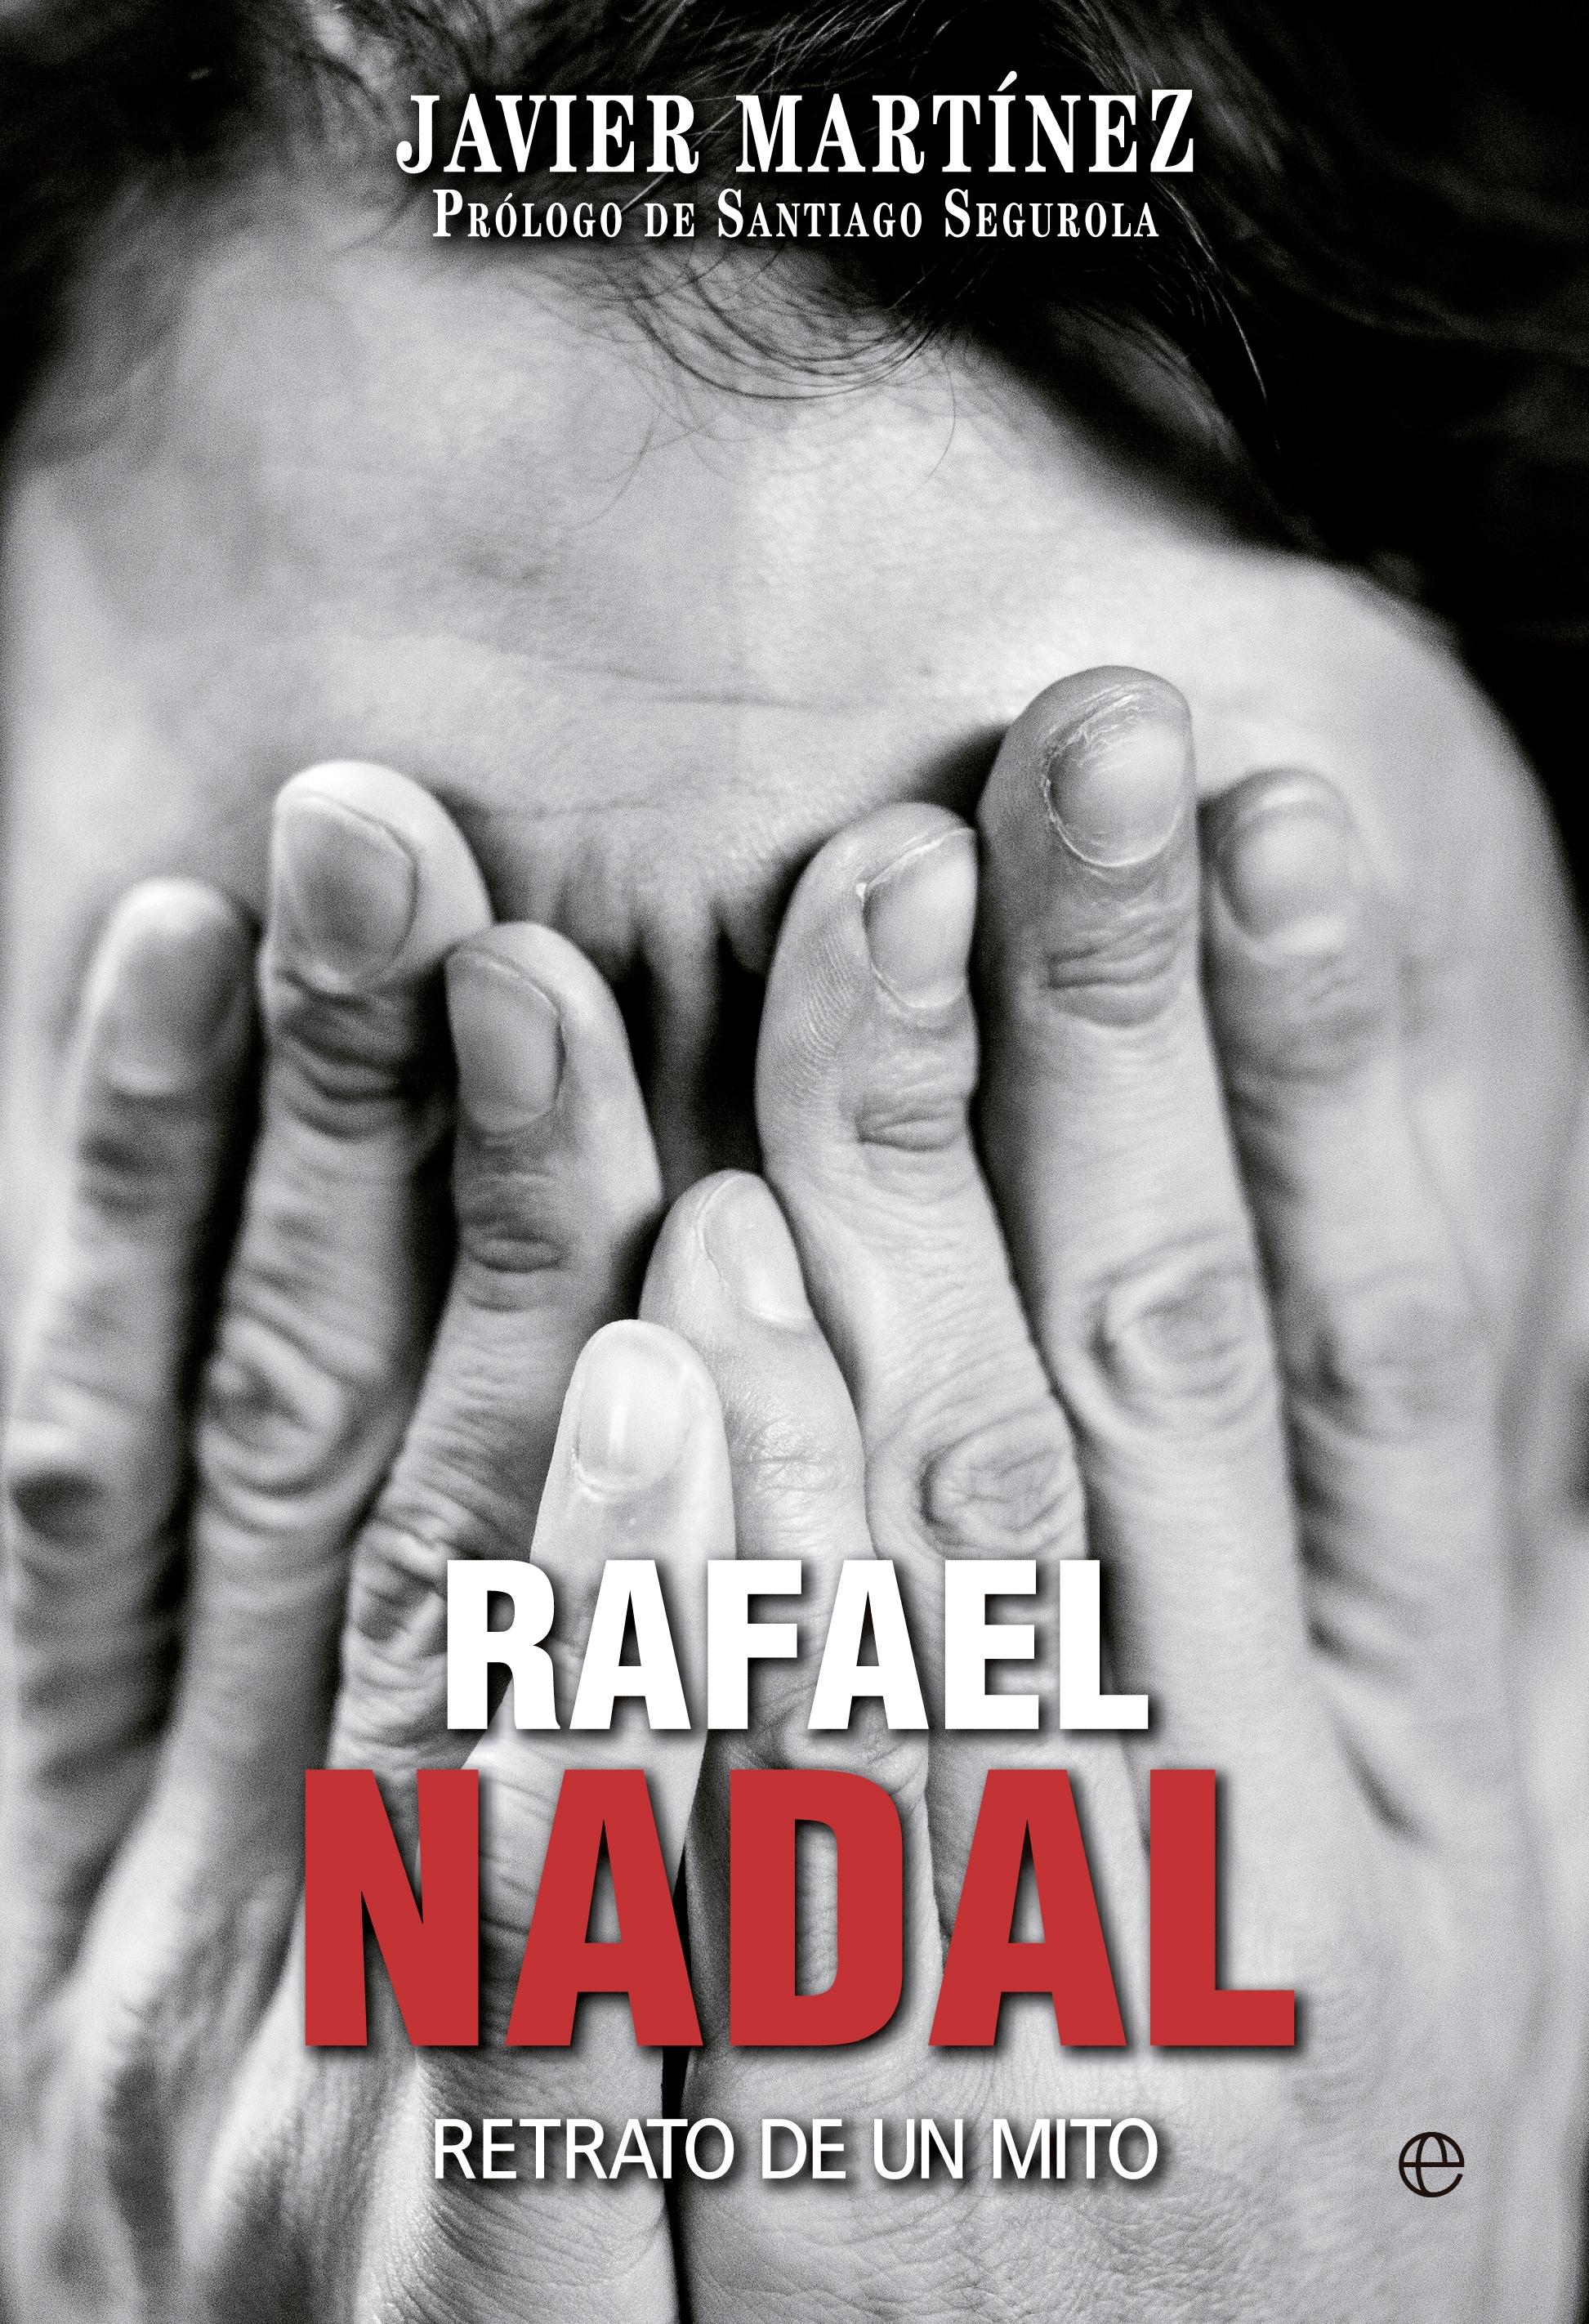 Rafael Nadal "Retrato de un Mito"